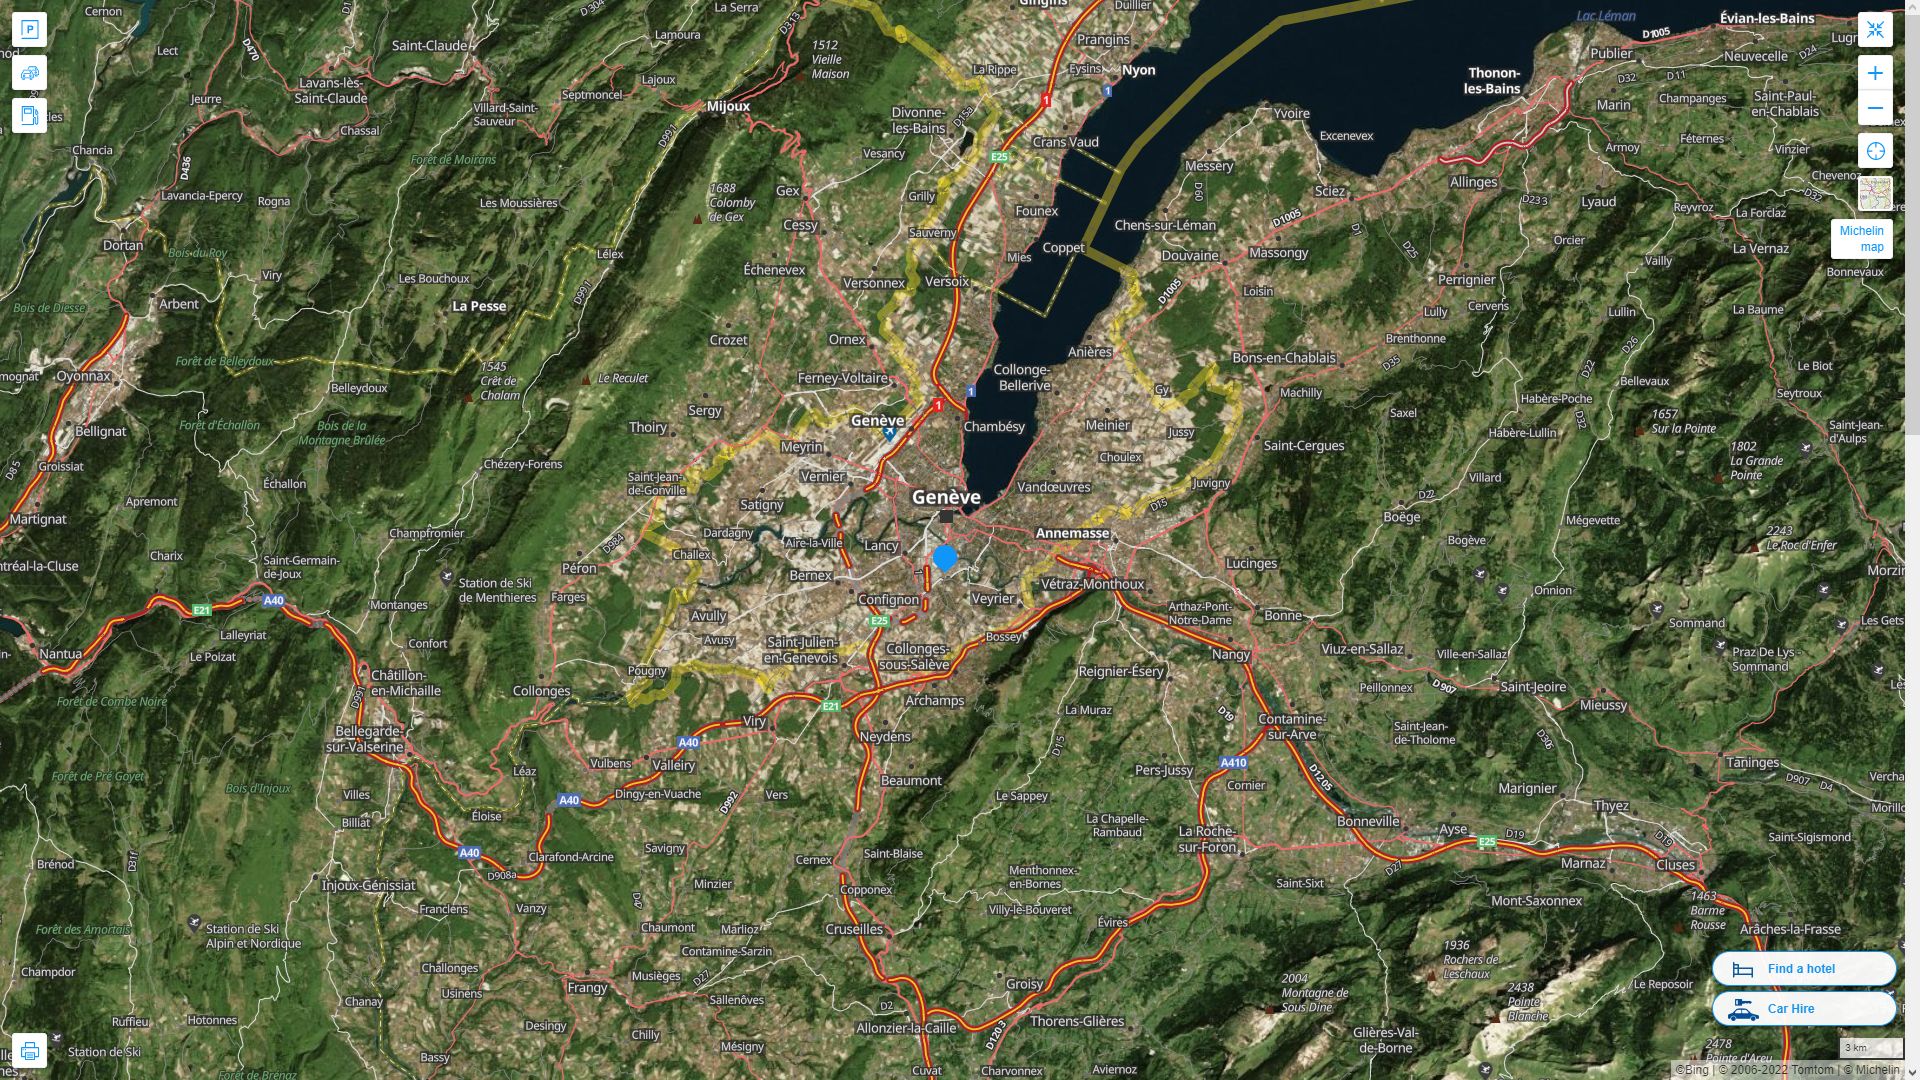 Carouge Suisse Autoroute et carte routiere avec vue satellite